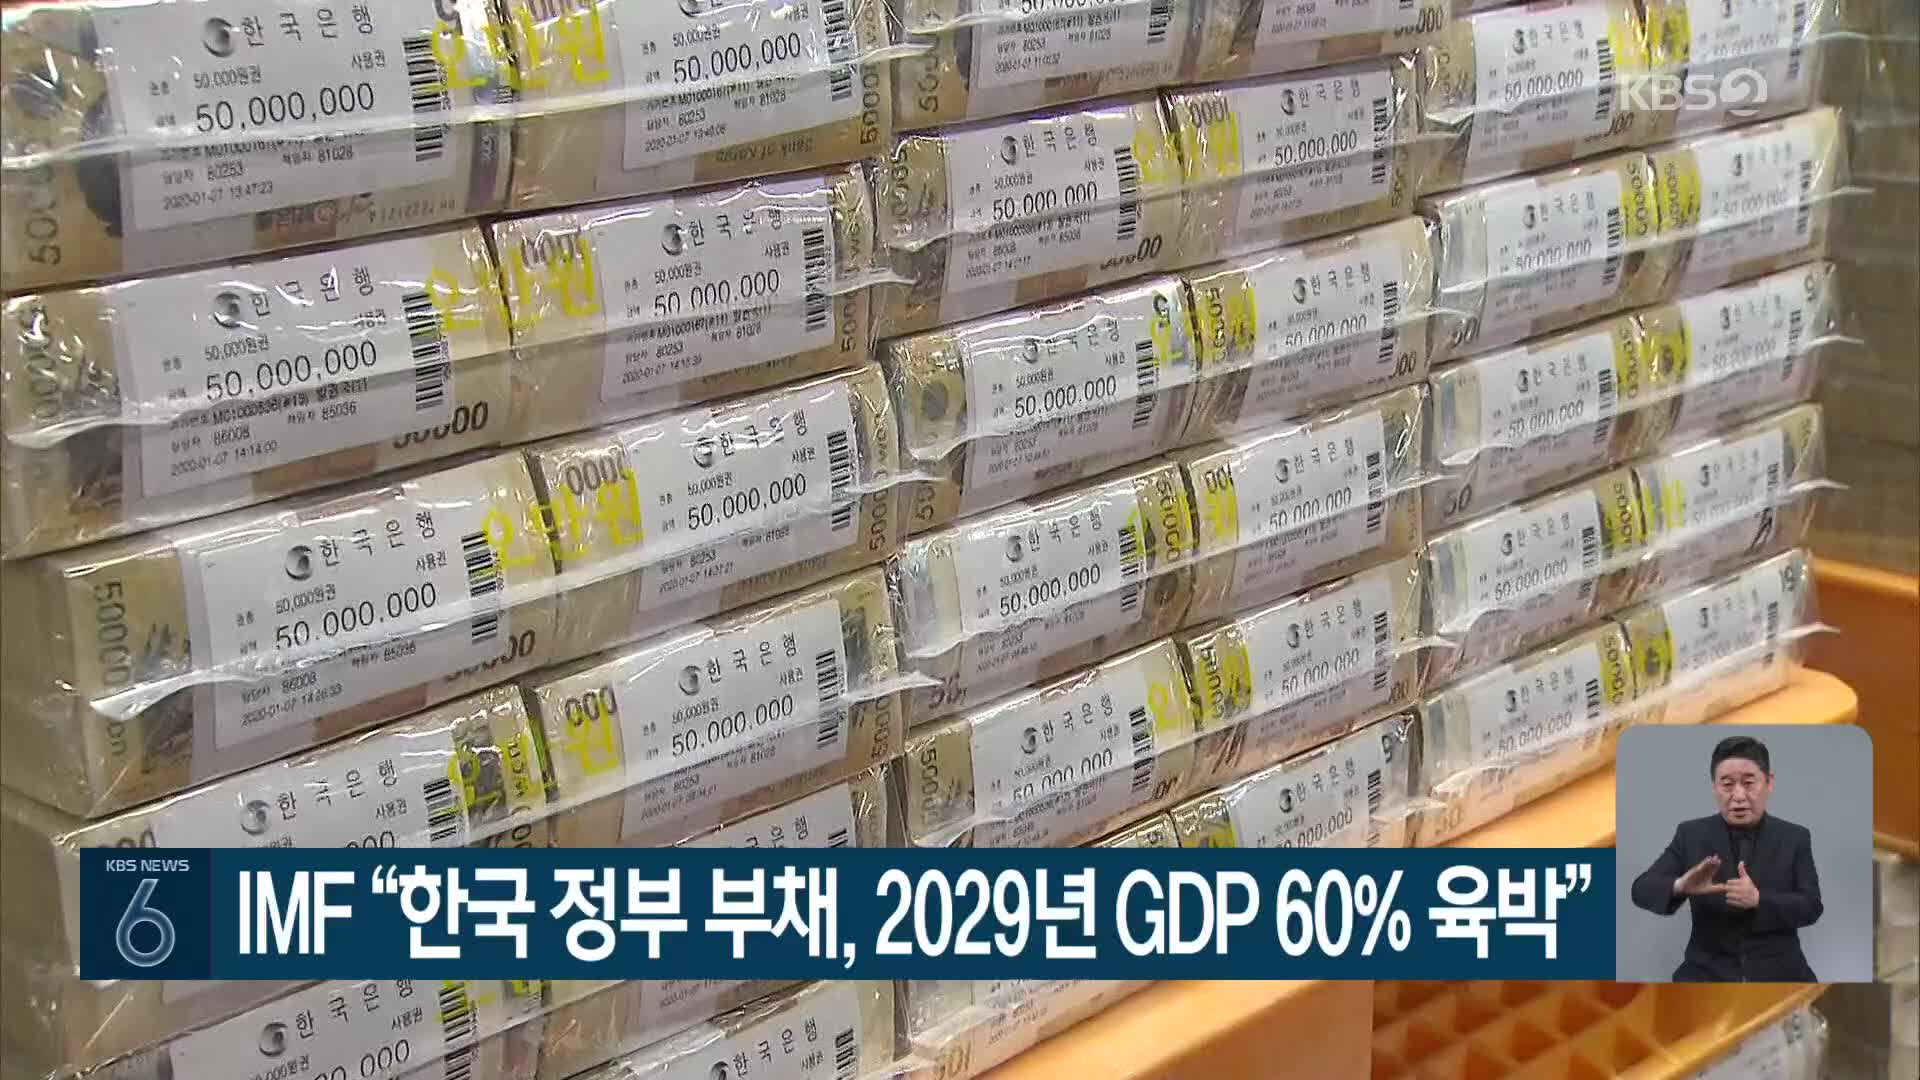 IMF “한국 정부 부채, 2029년 GDP 60% 육박”